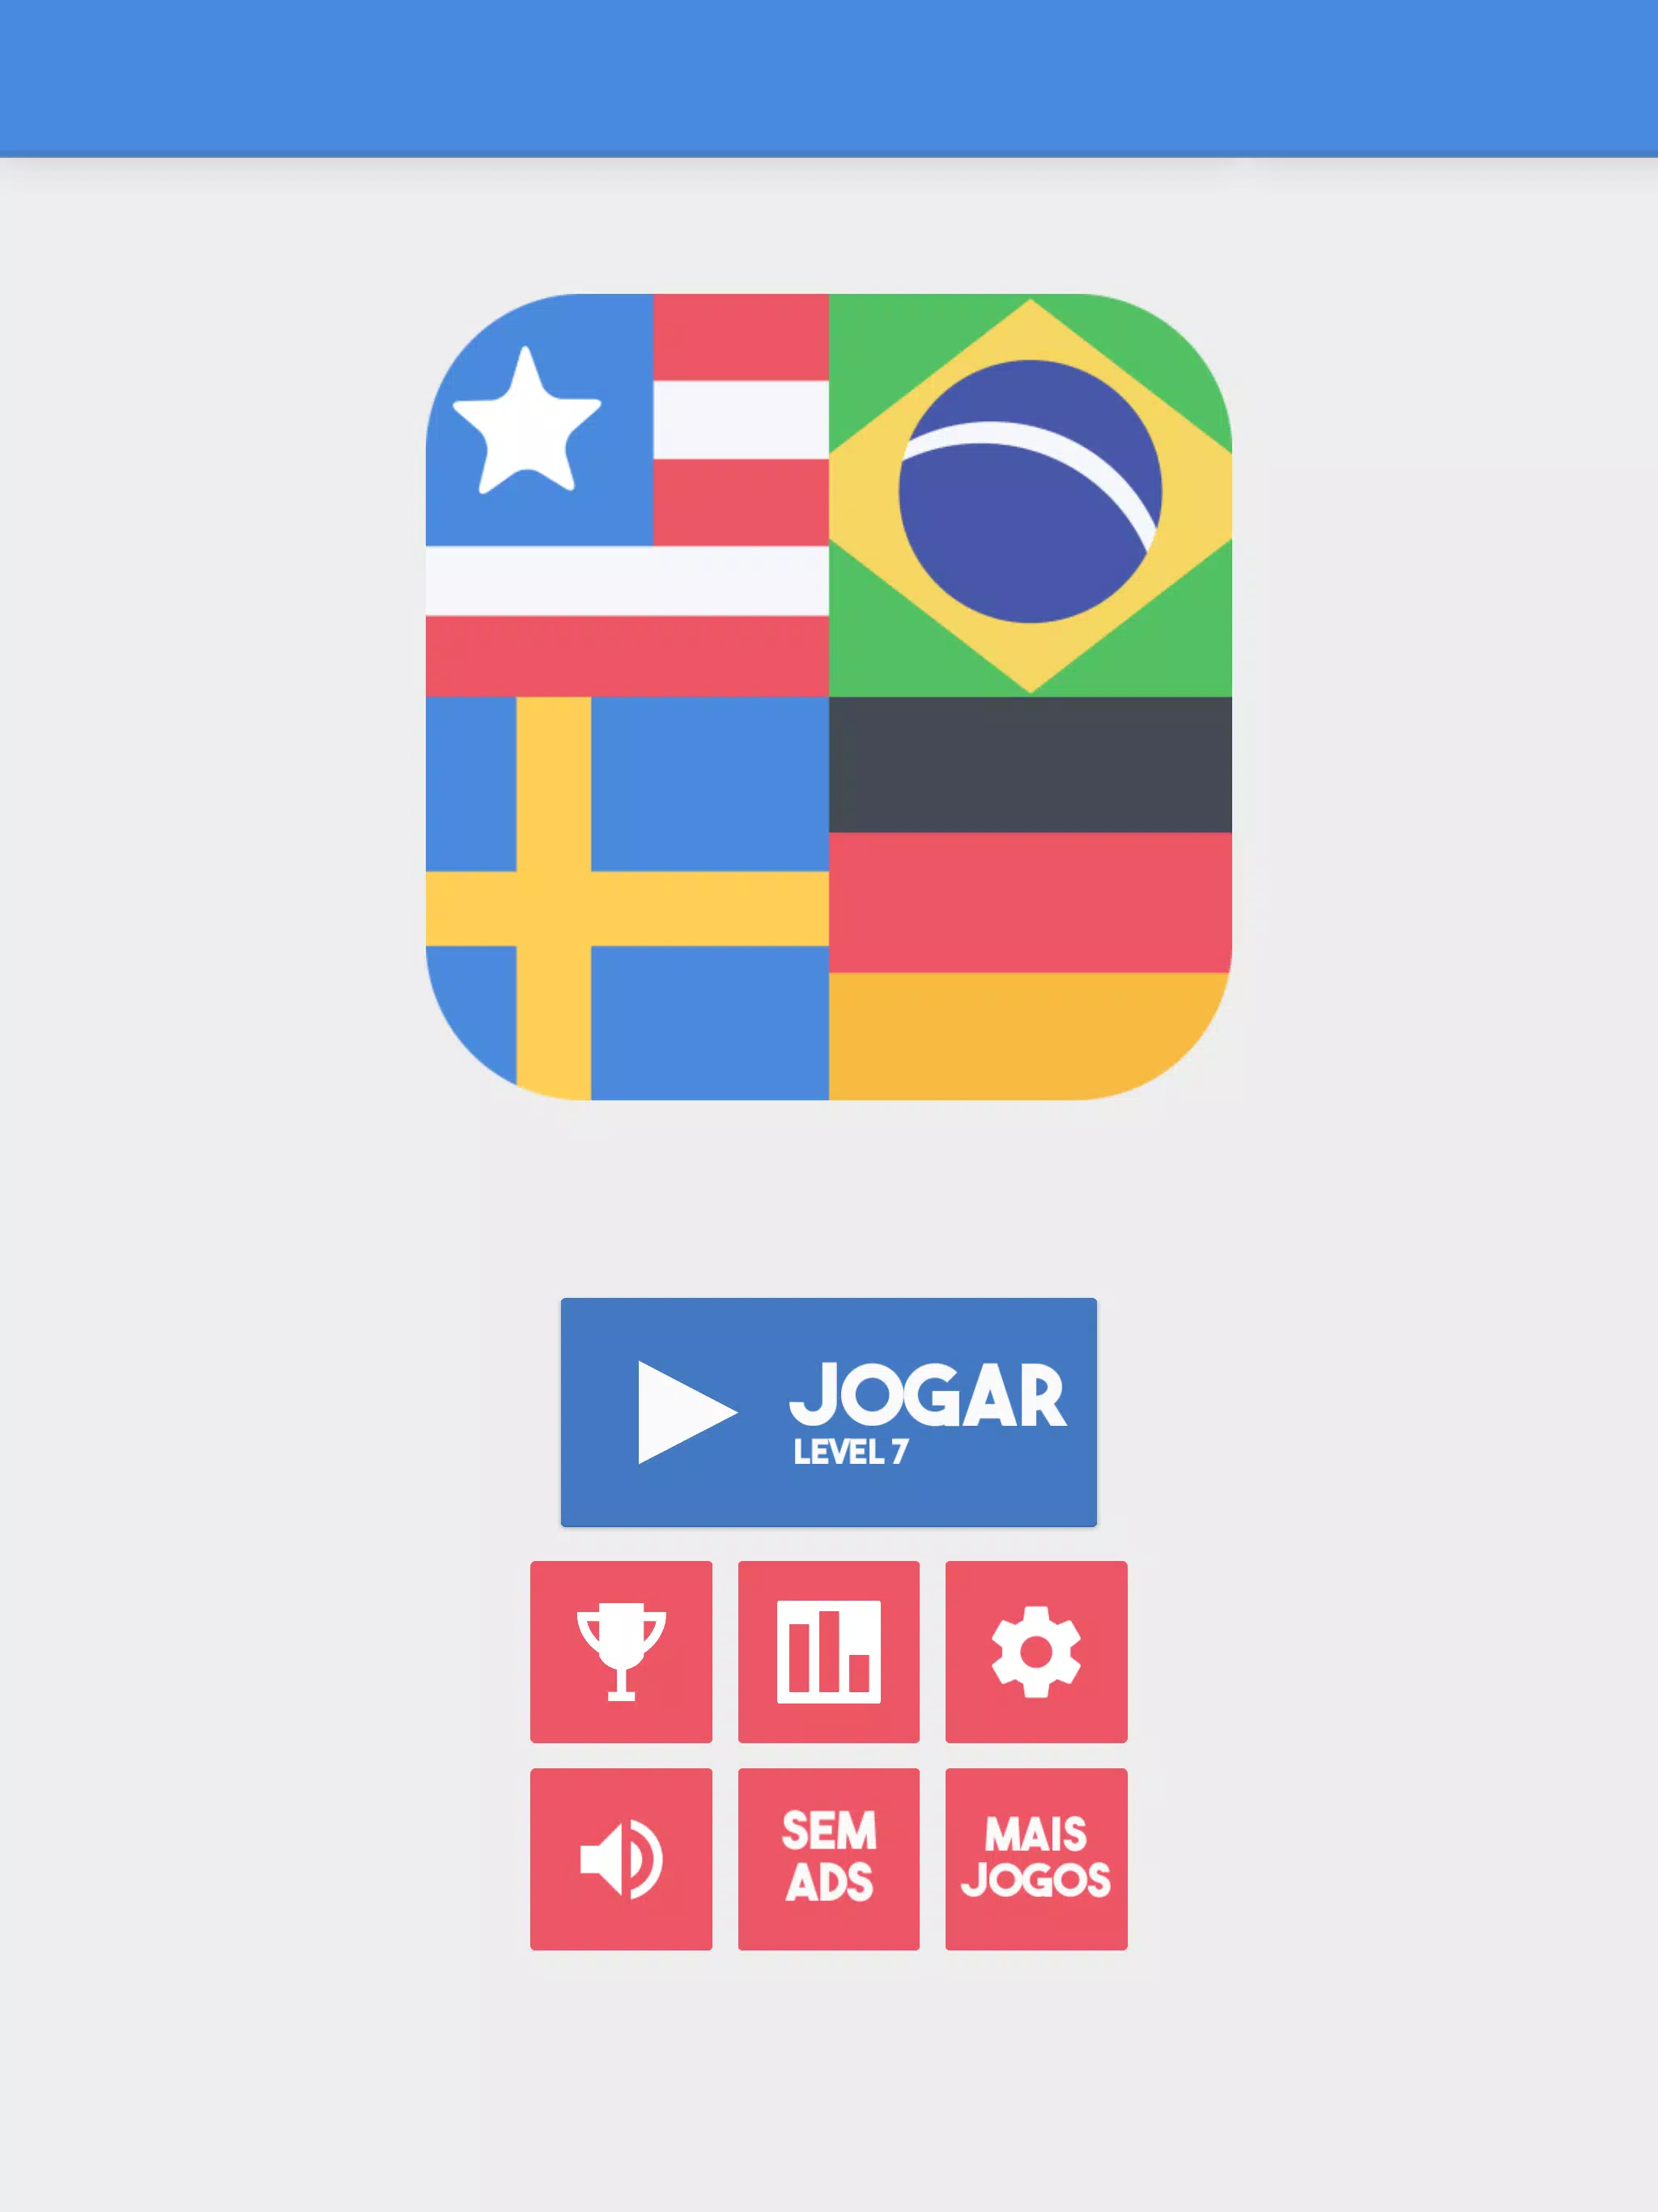 Download do APK de Bandeiras do Mundo Quiz para Android